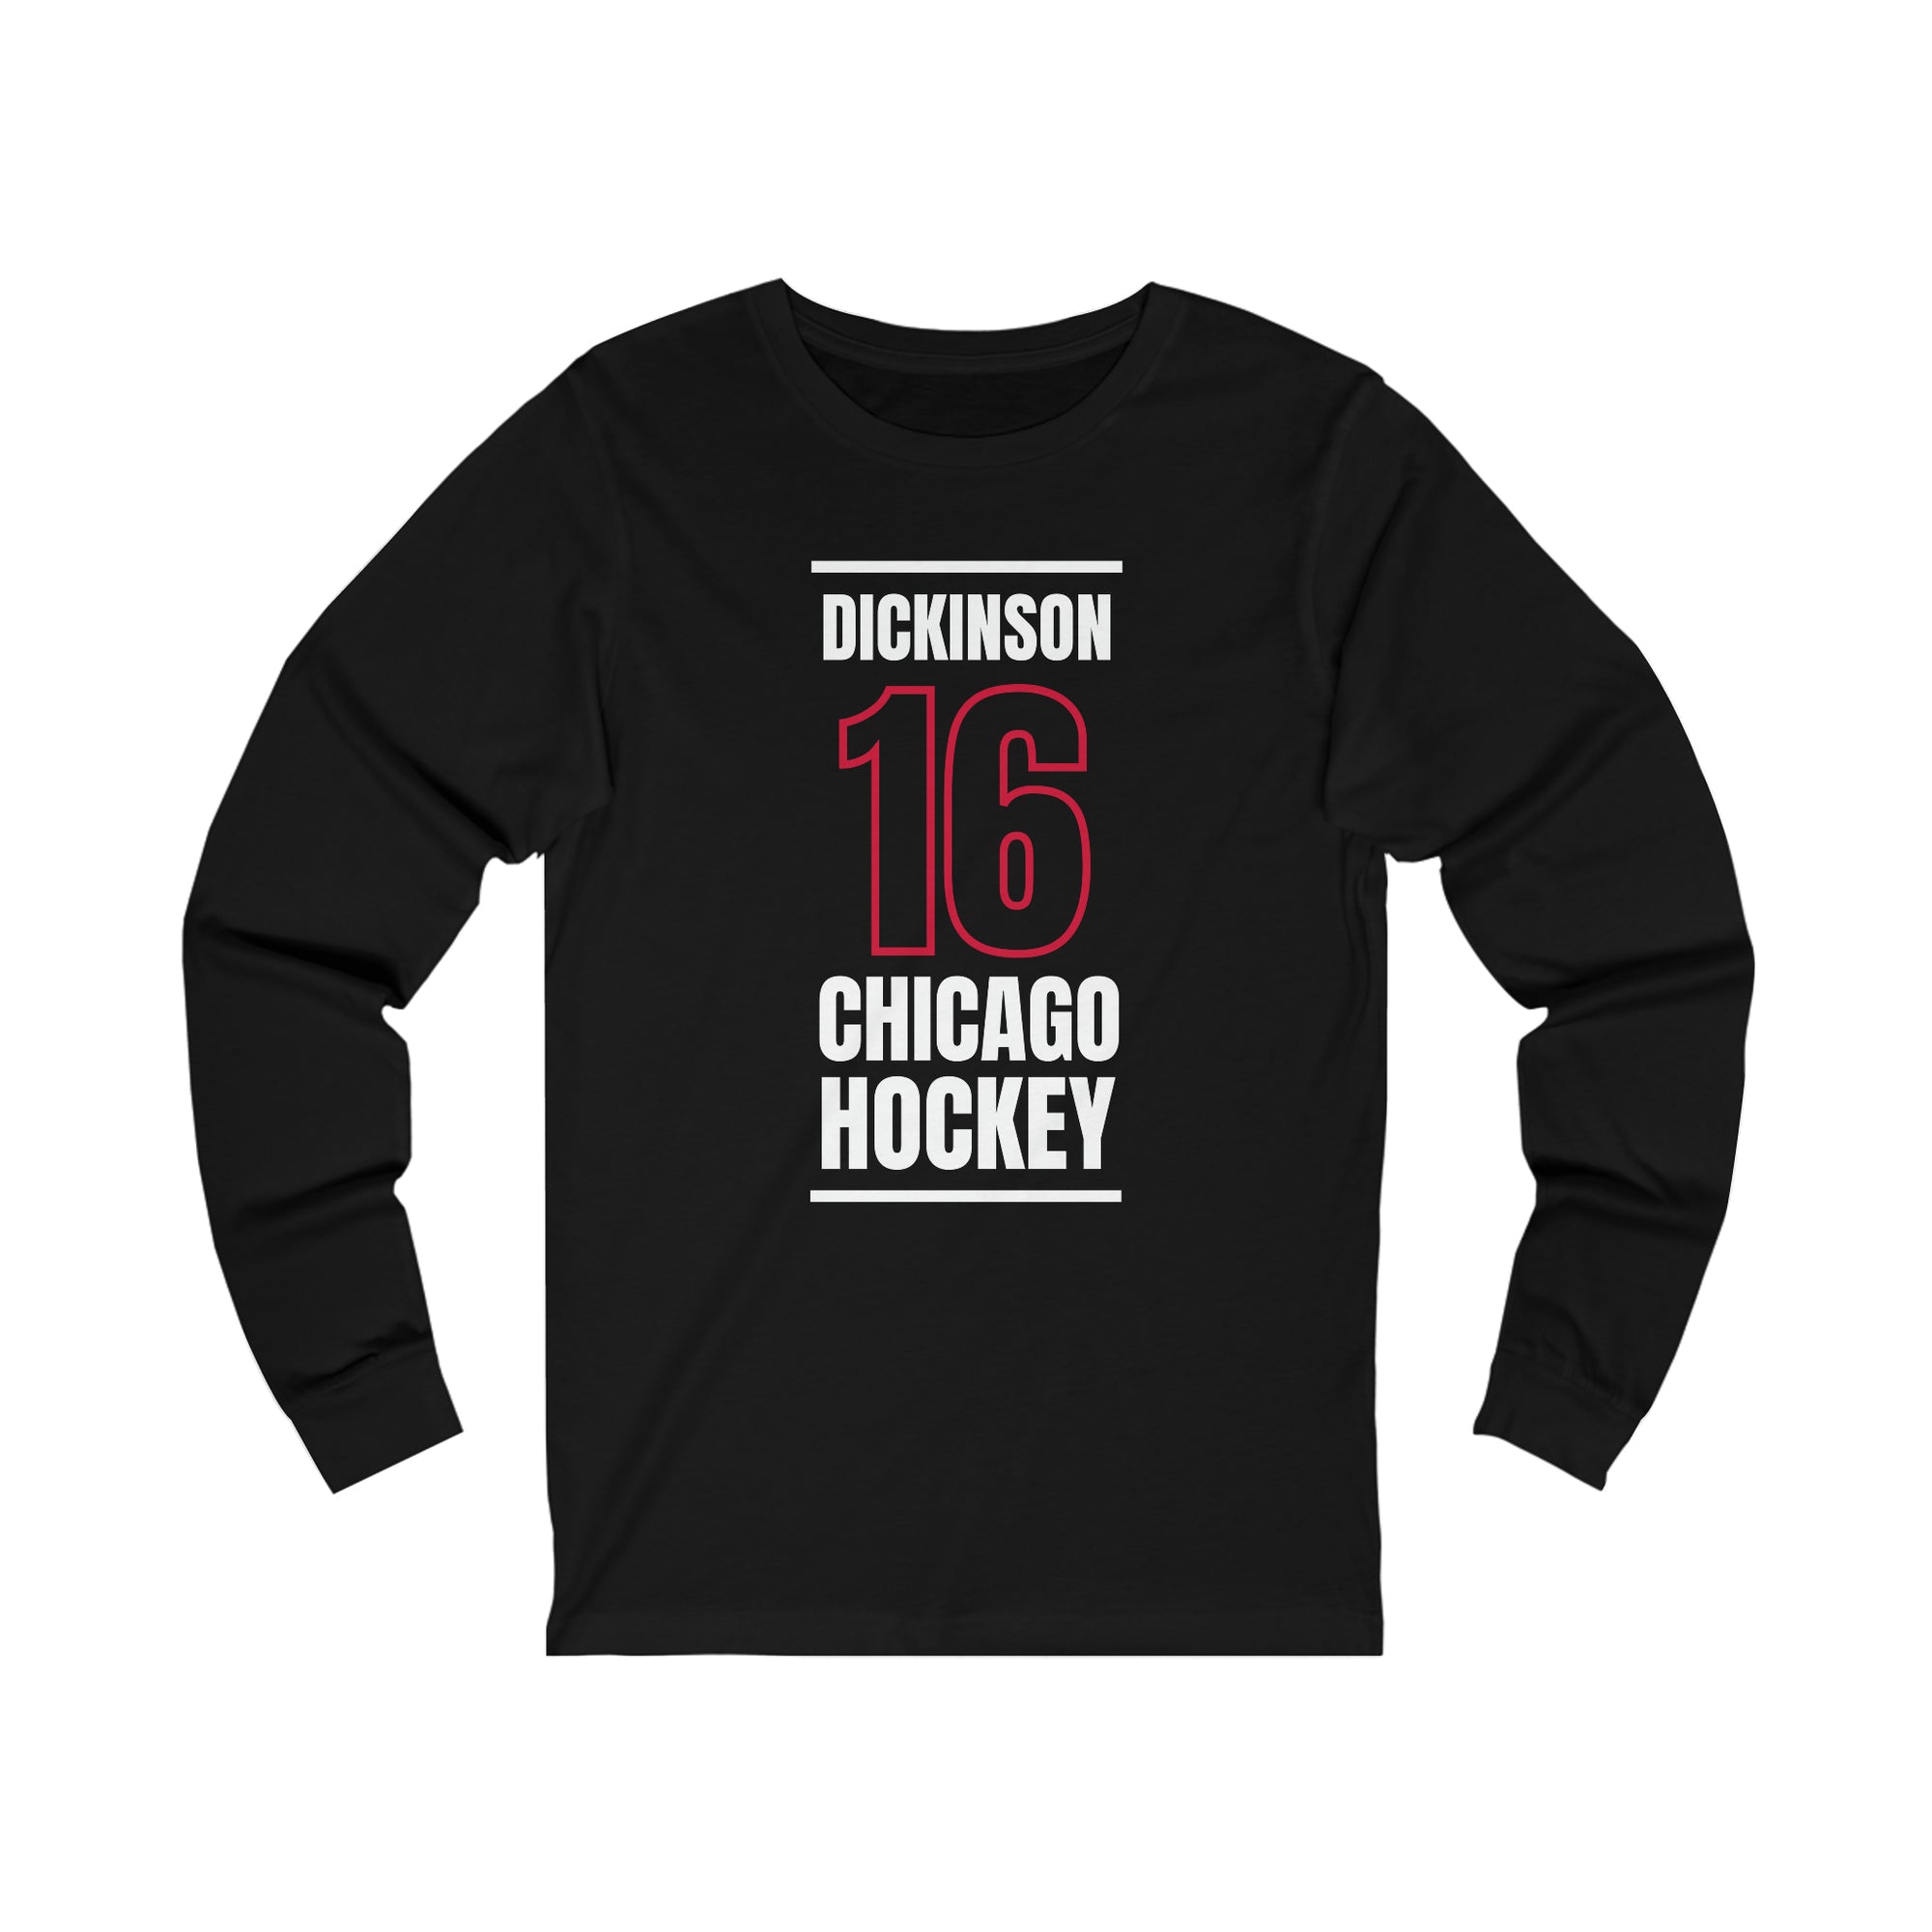 Dickinson 16 Chicago Hockey Black Vertical Design Unisex Jersey Long Sleeve Shirt